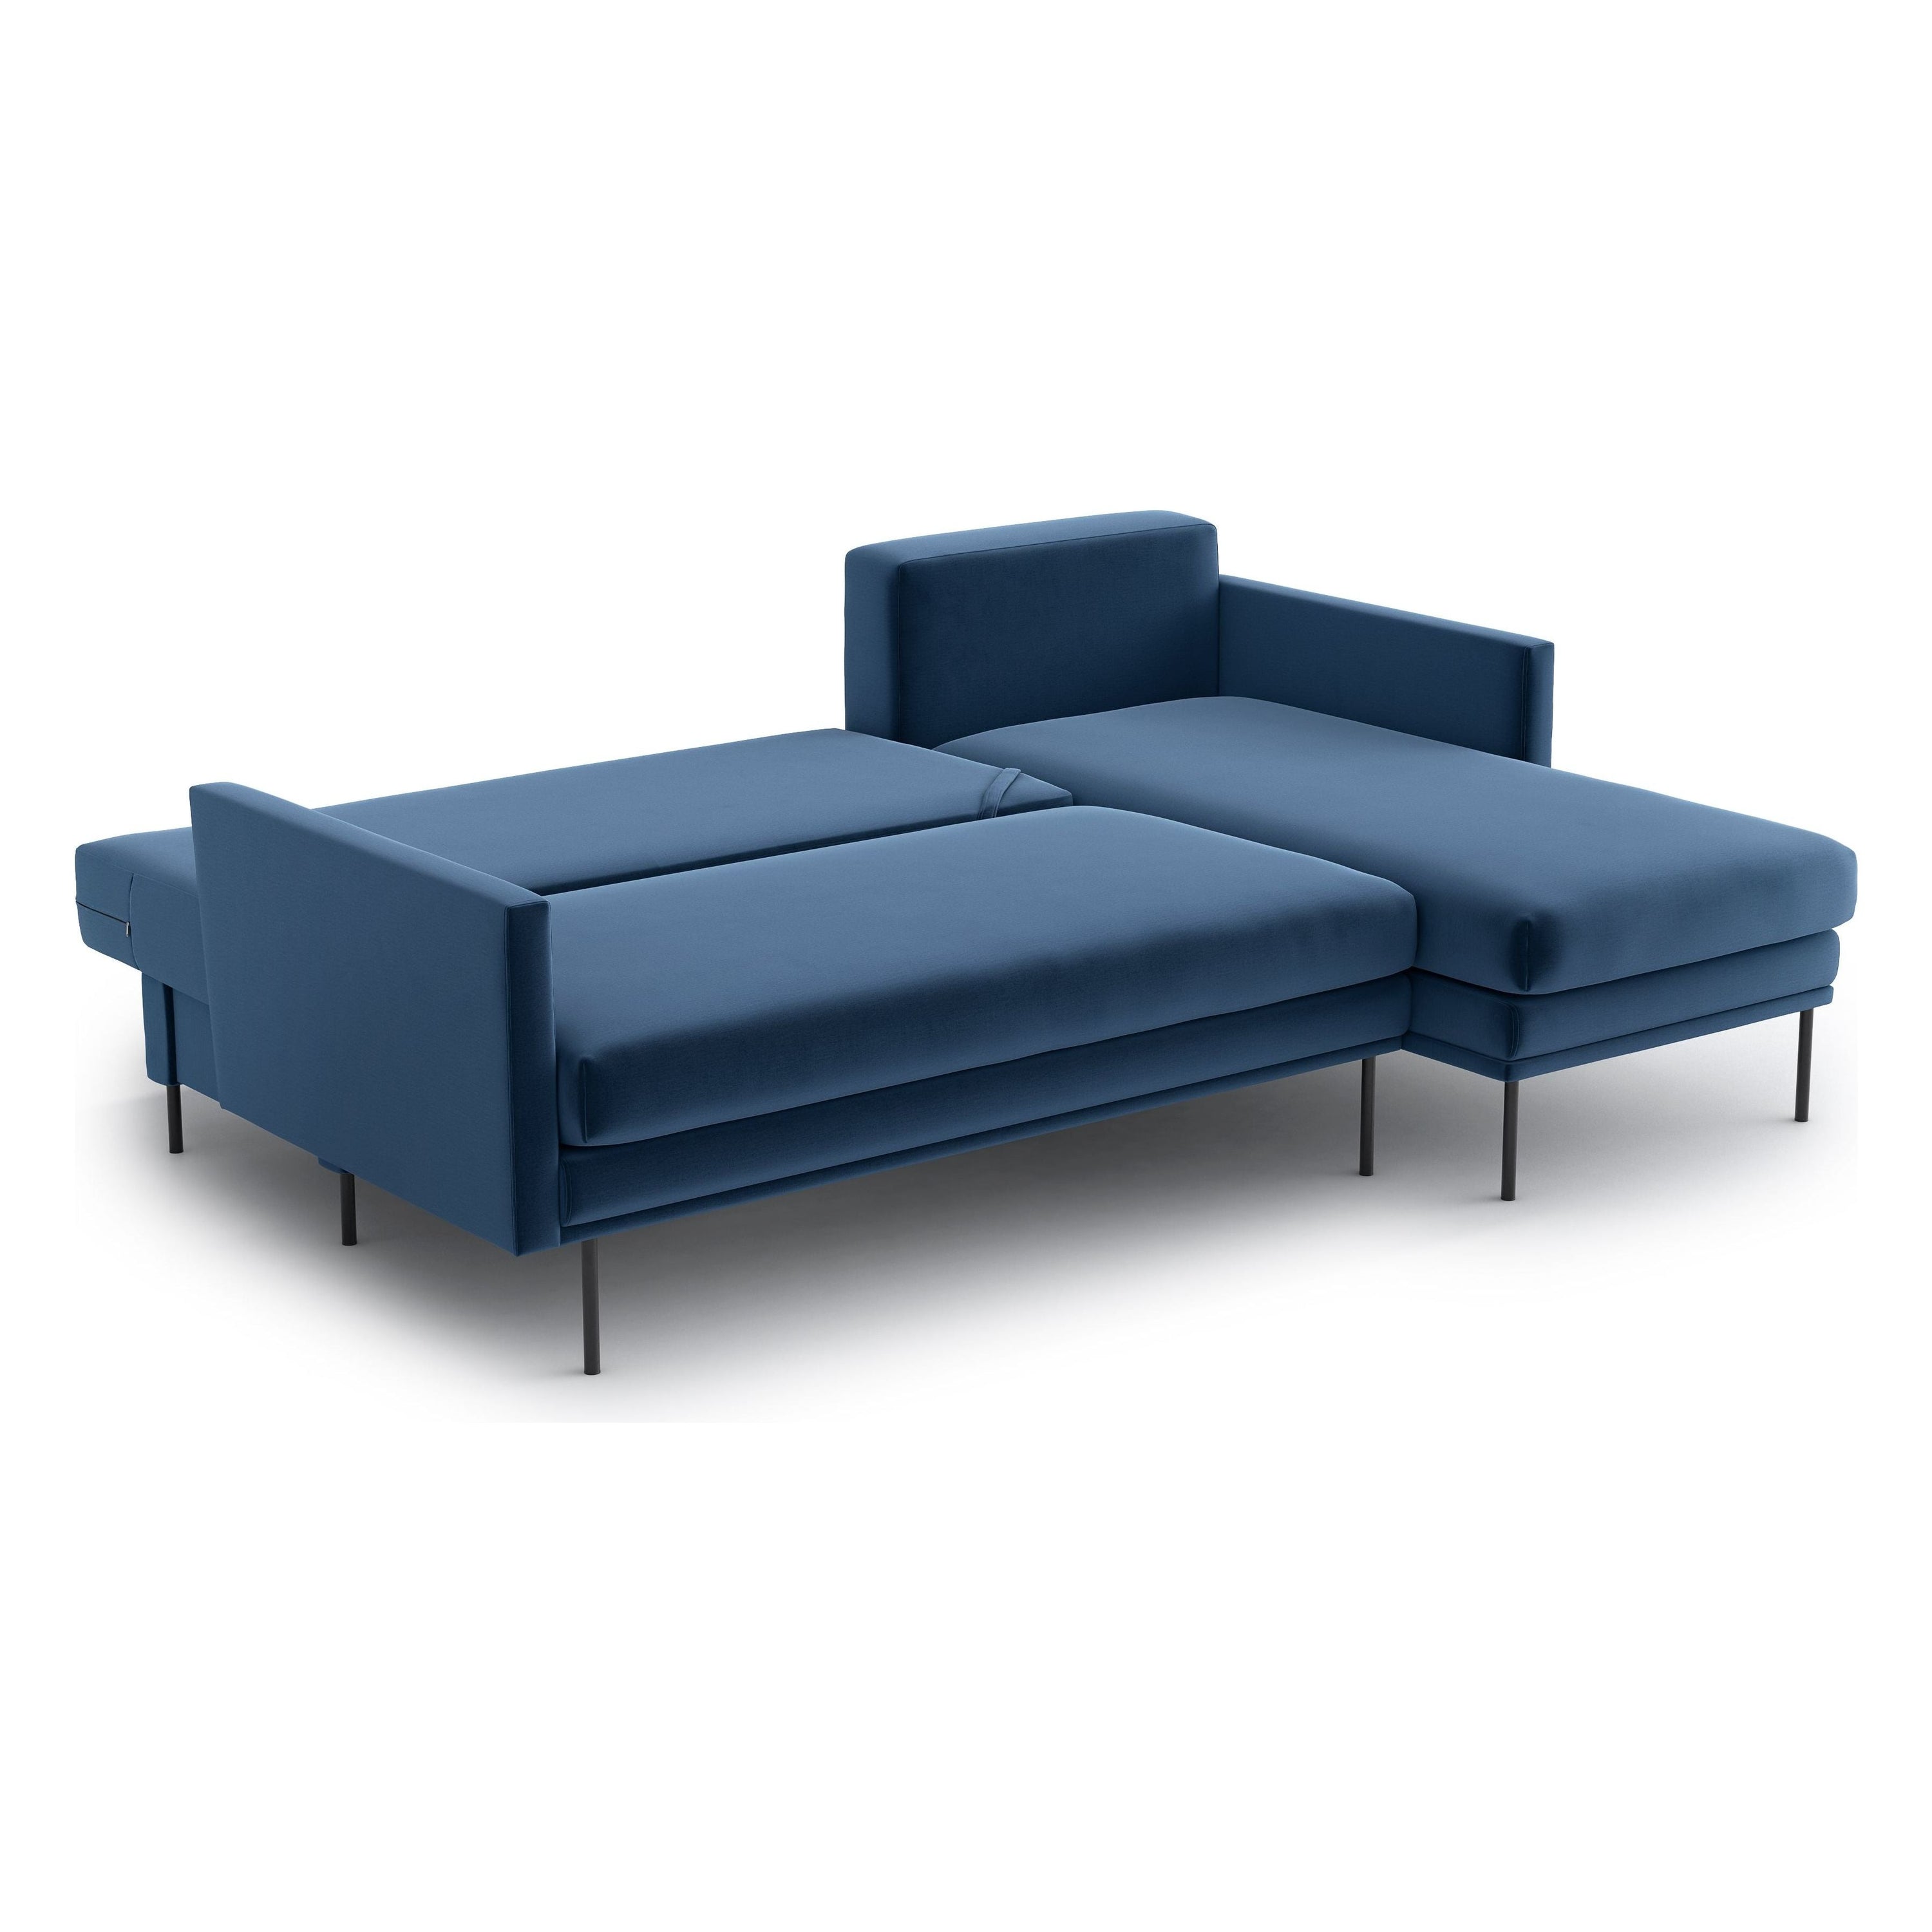 BLUES kampinė sofa lova, mėlyna spalva, universali kampo pusė